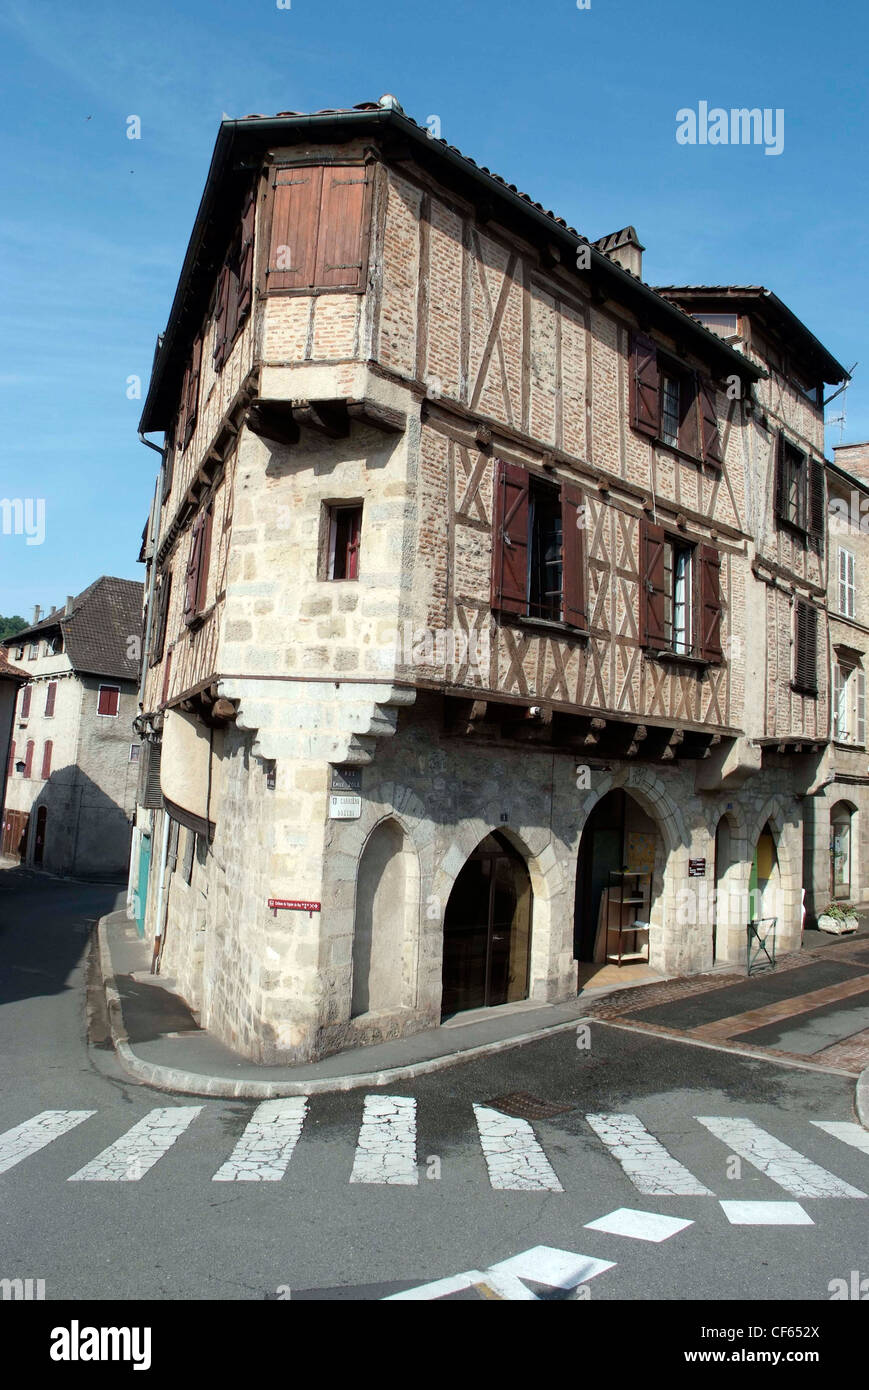 FRANCE, Lot Cele, Figeac, medieval merchant's house Stock Photo